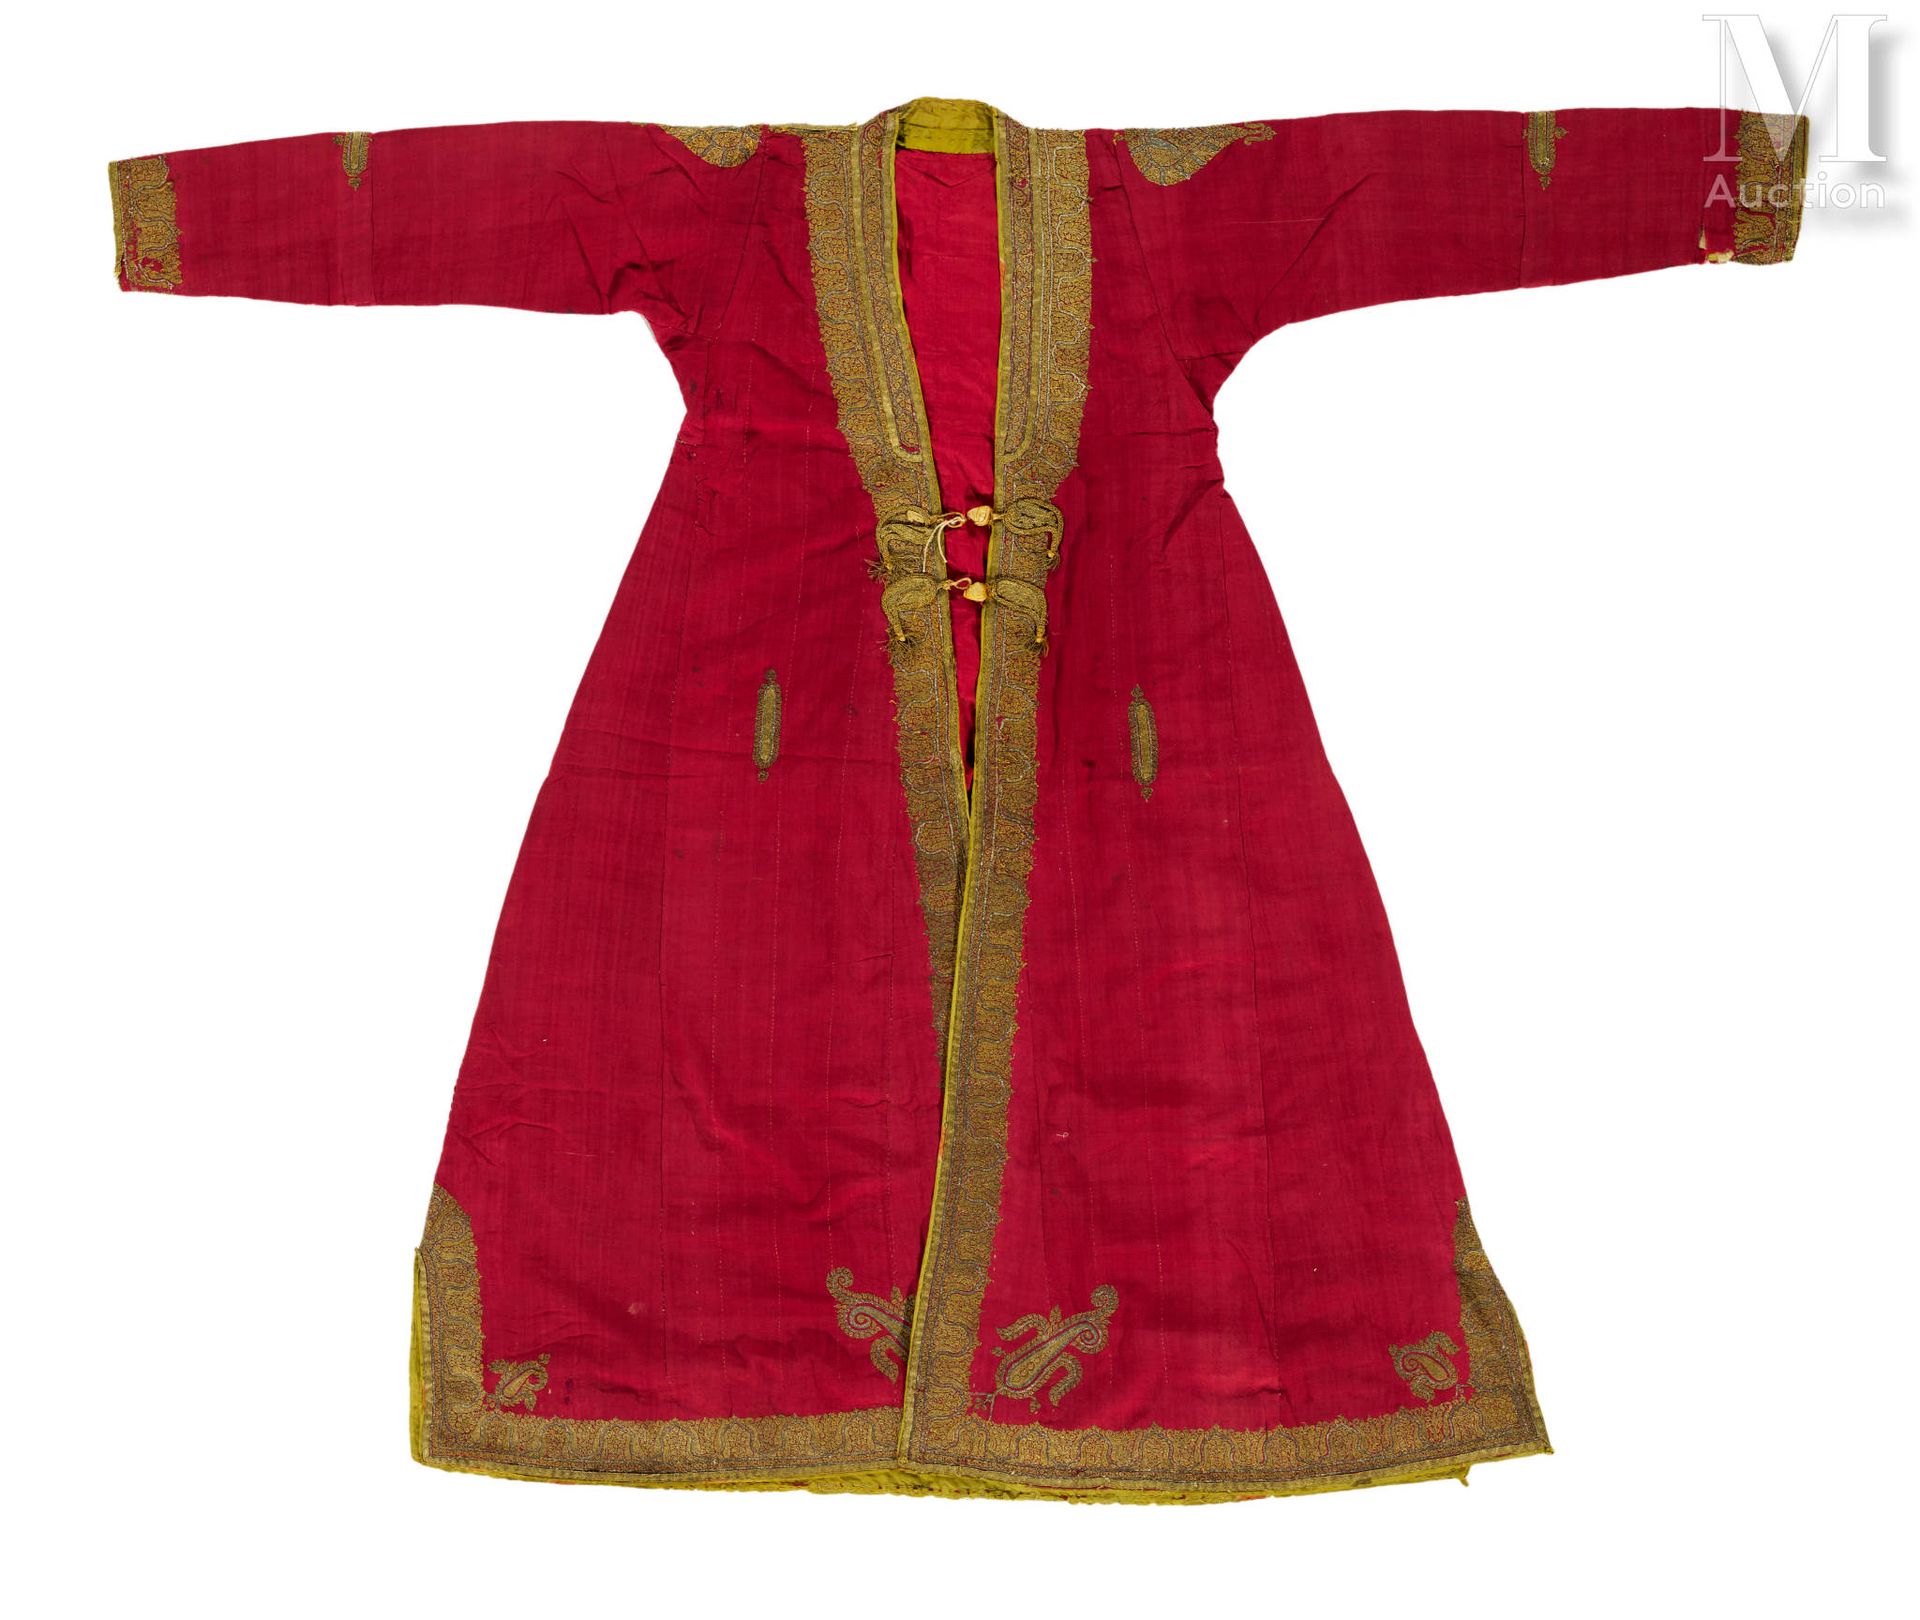 Choga - Robe sikh Indien, Punjab, ca. 1850-1870
Herrenkleid (Choga) aus purpurro&hellip;